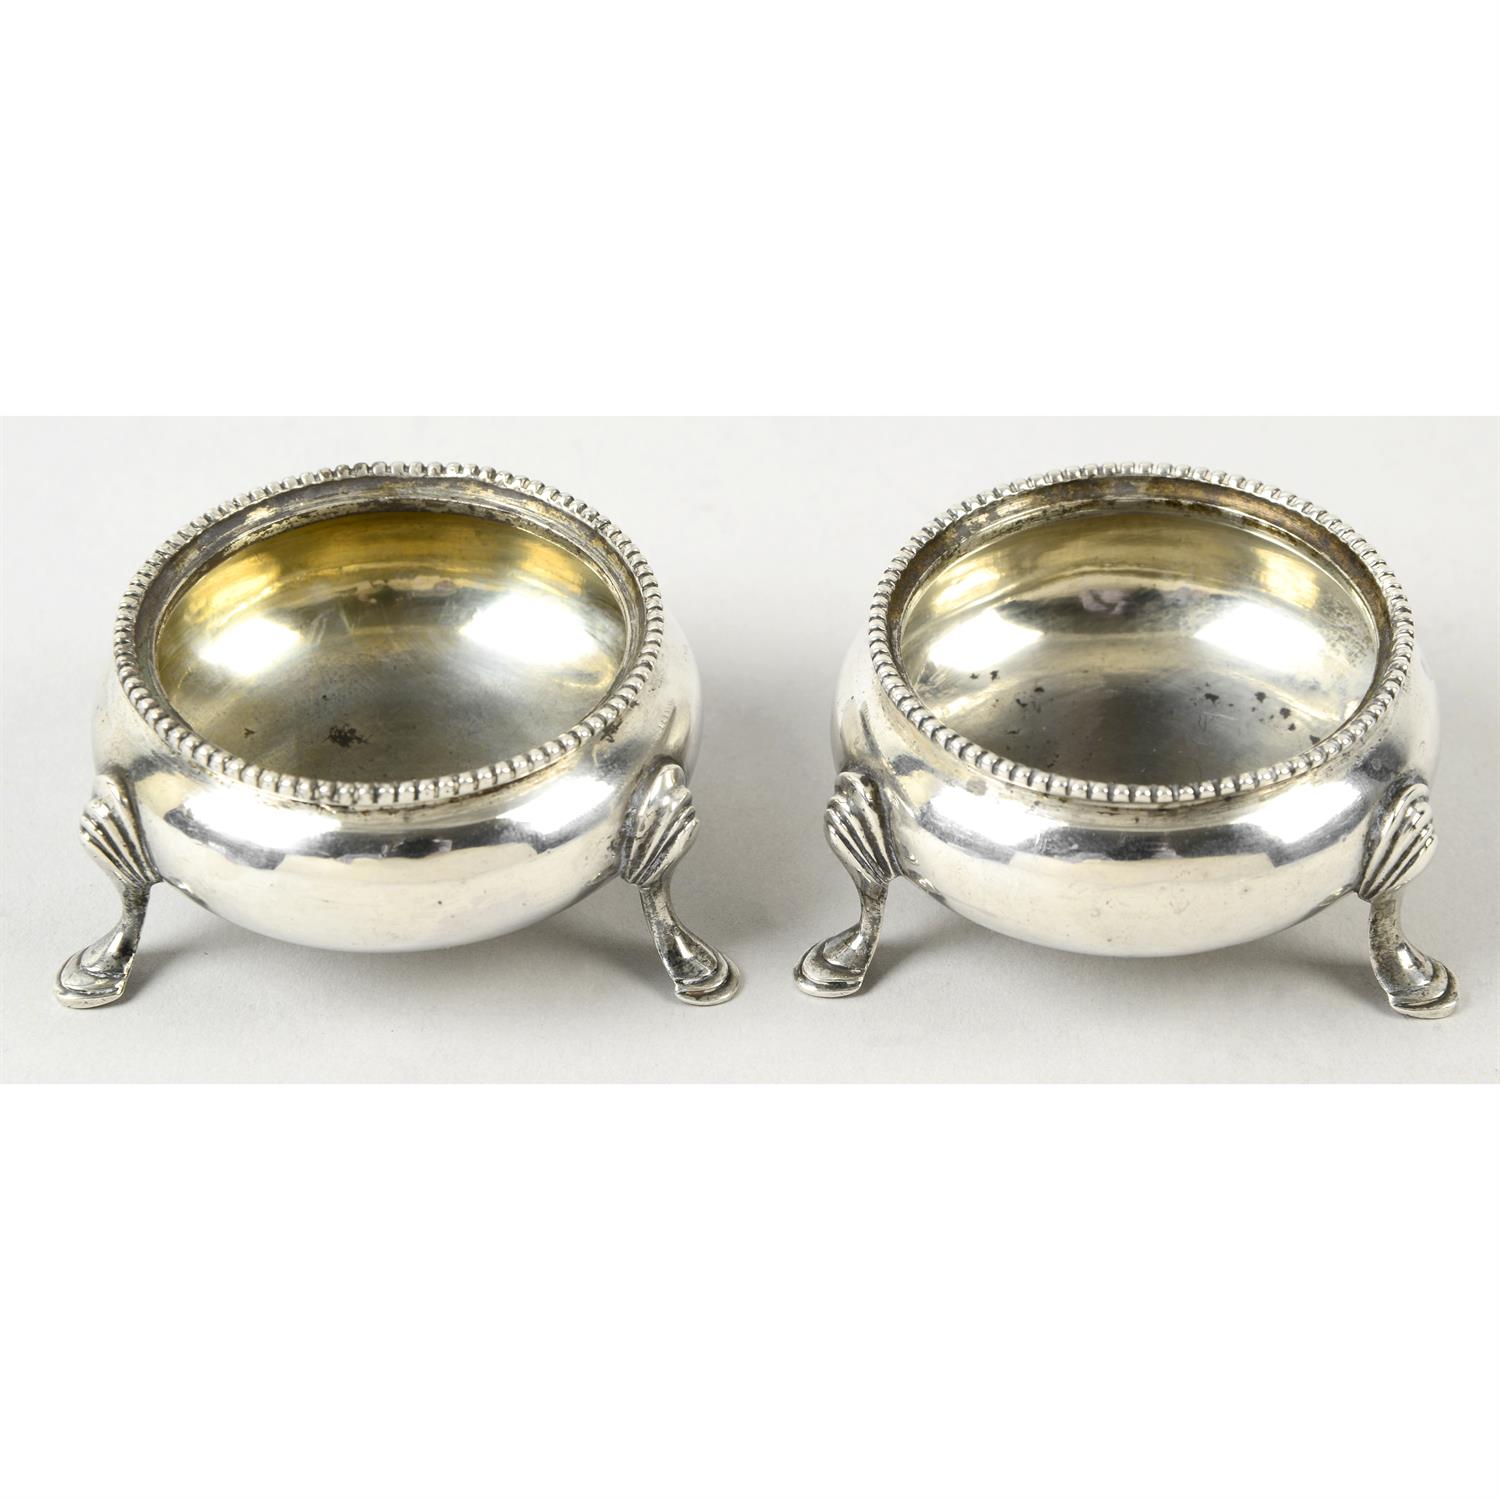 A pair of Victorian silver cauldron open salts.